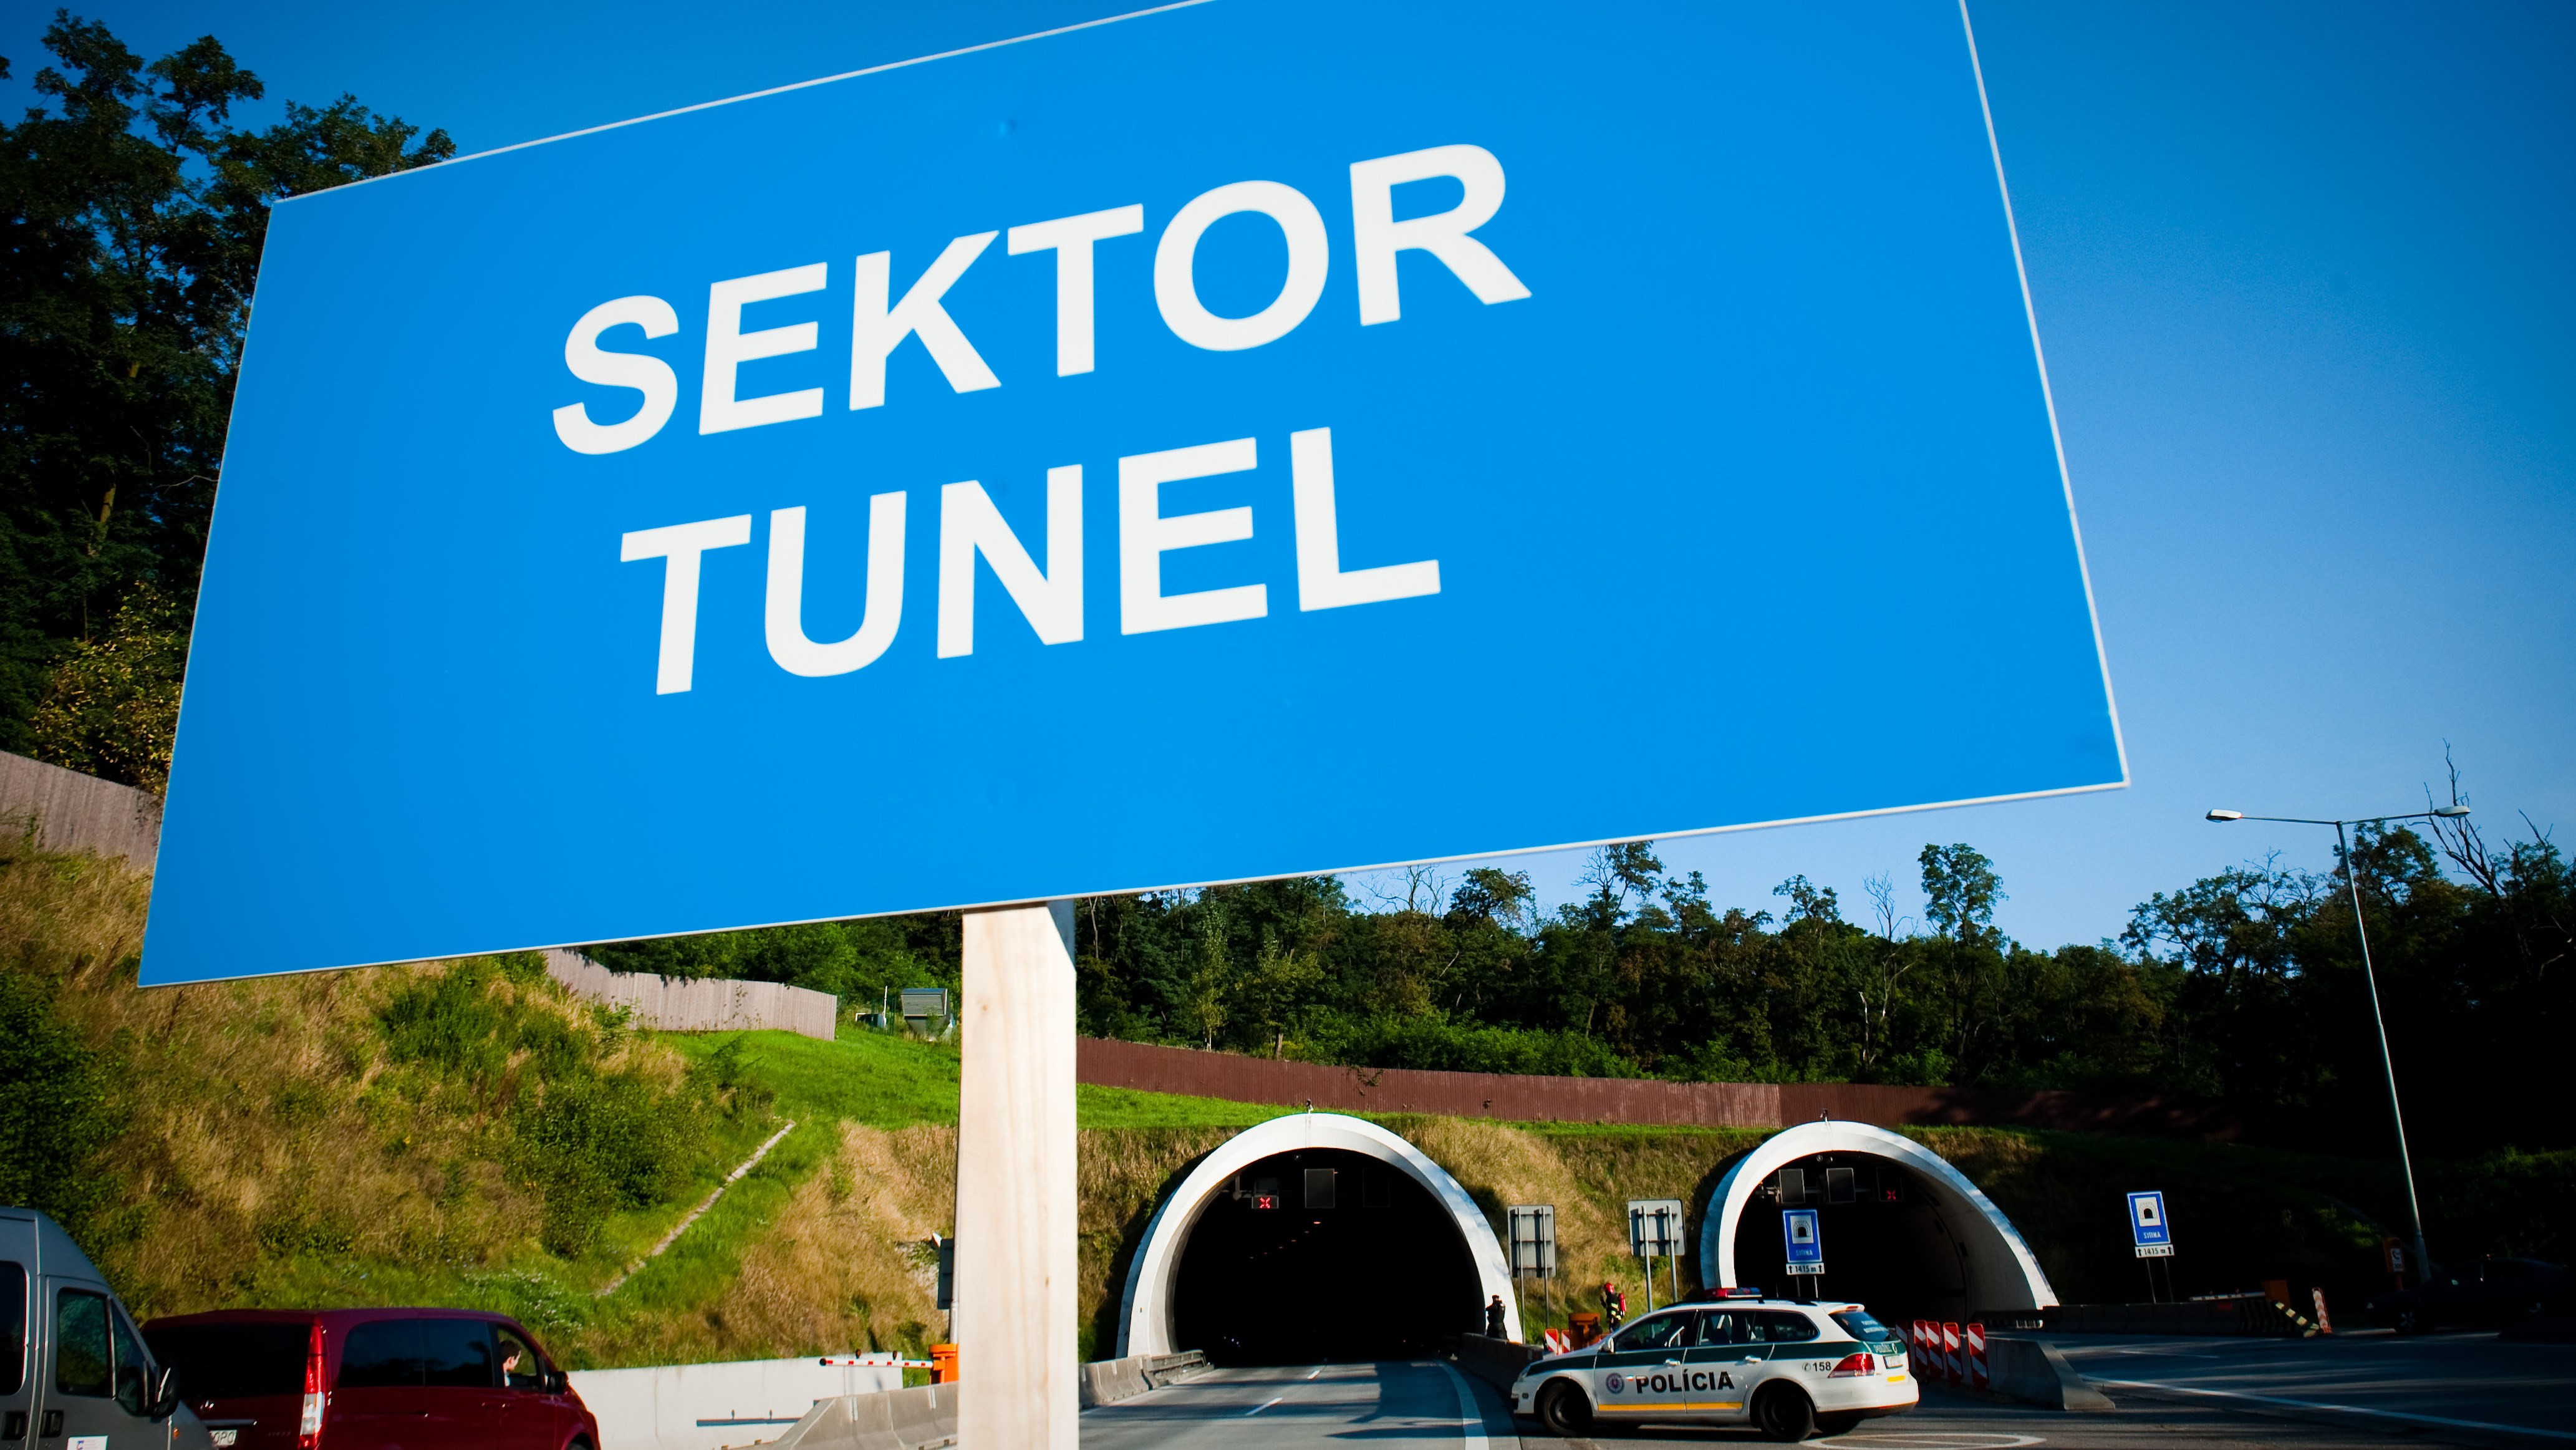 Sektor_tunel_Sitina_polícia